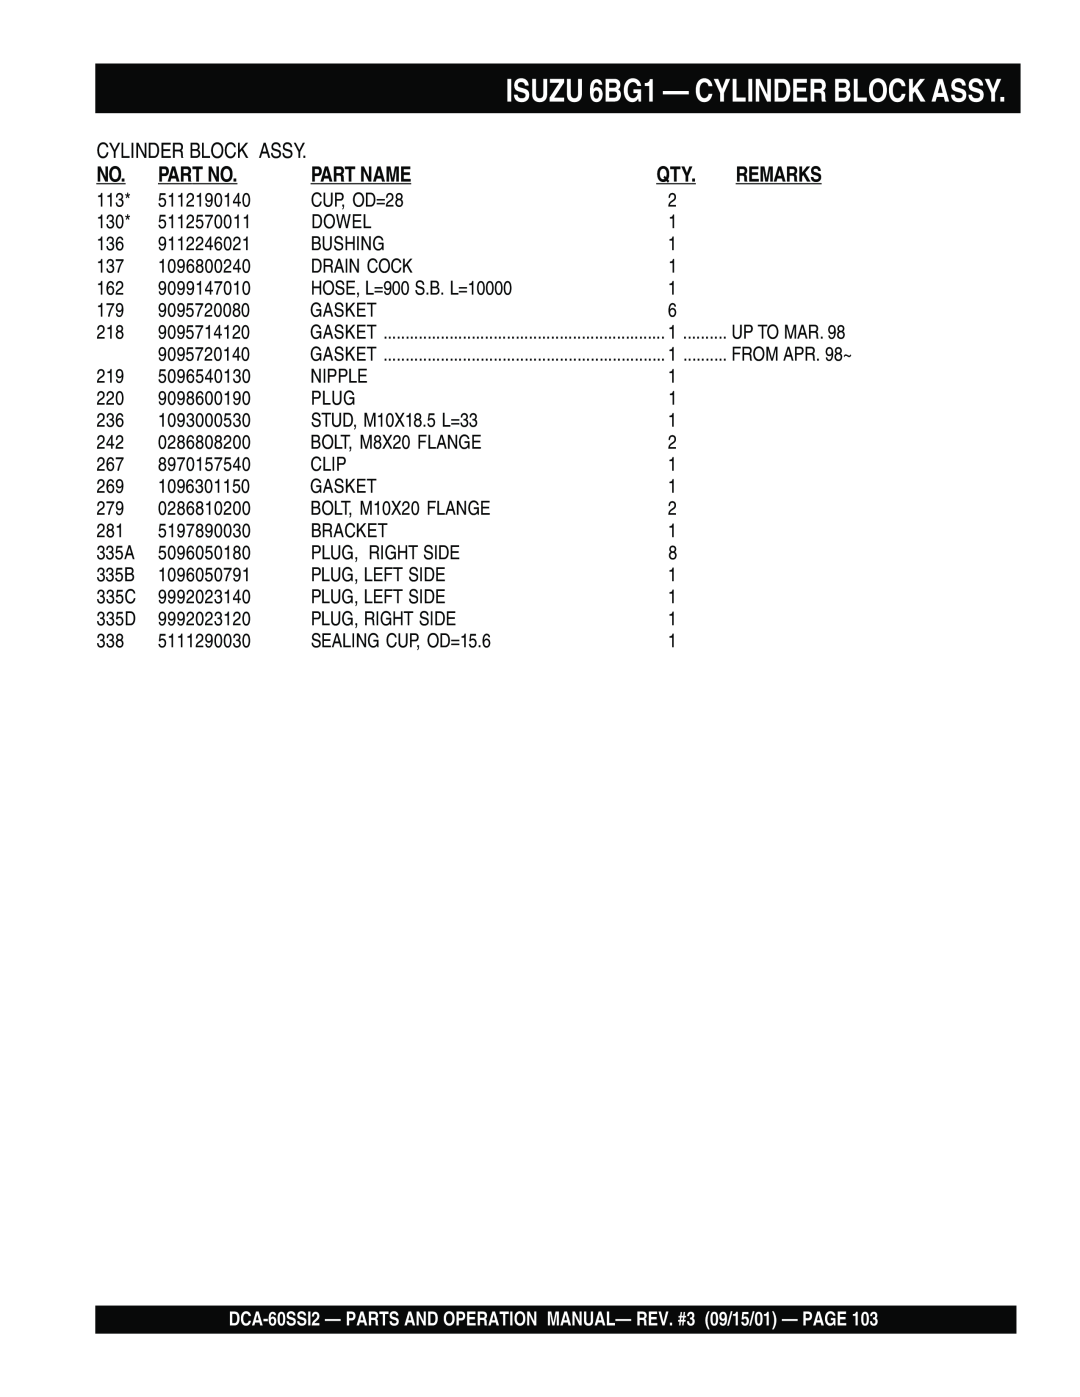 Multiquip DCA-60SS12 operation manual ISUZU 6BG1 — CYLINDER BLOCK ASSY, Part No, Part Name, Remarks 